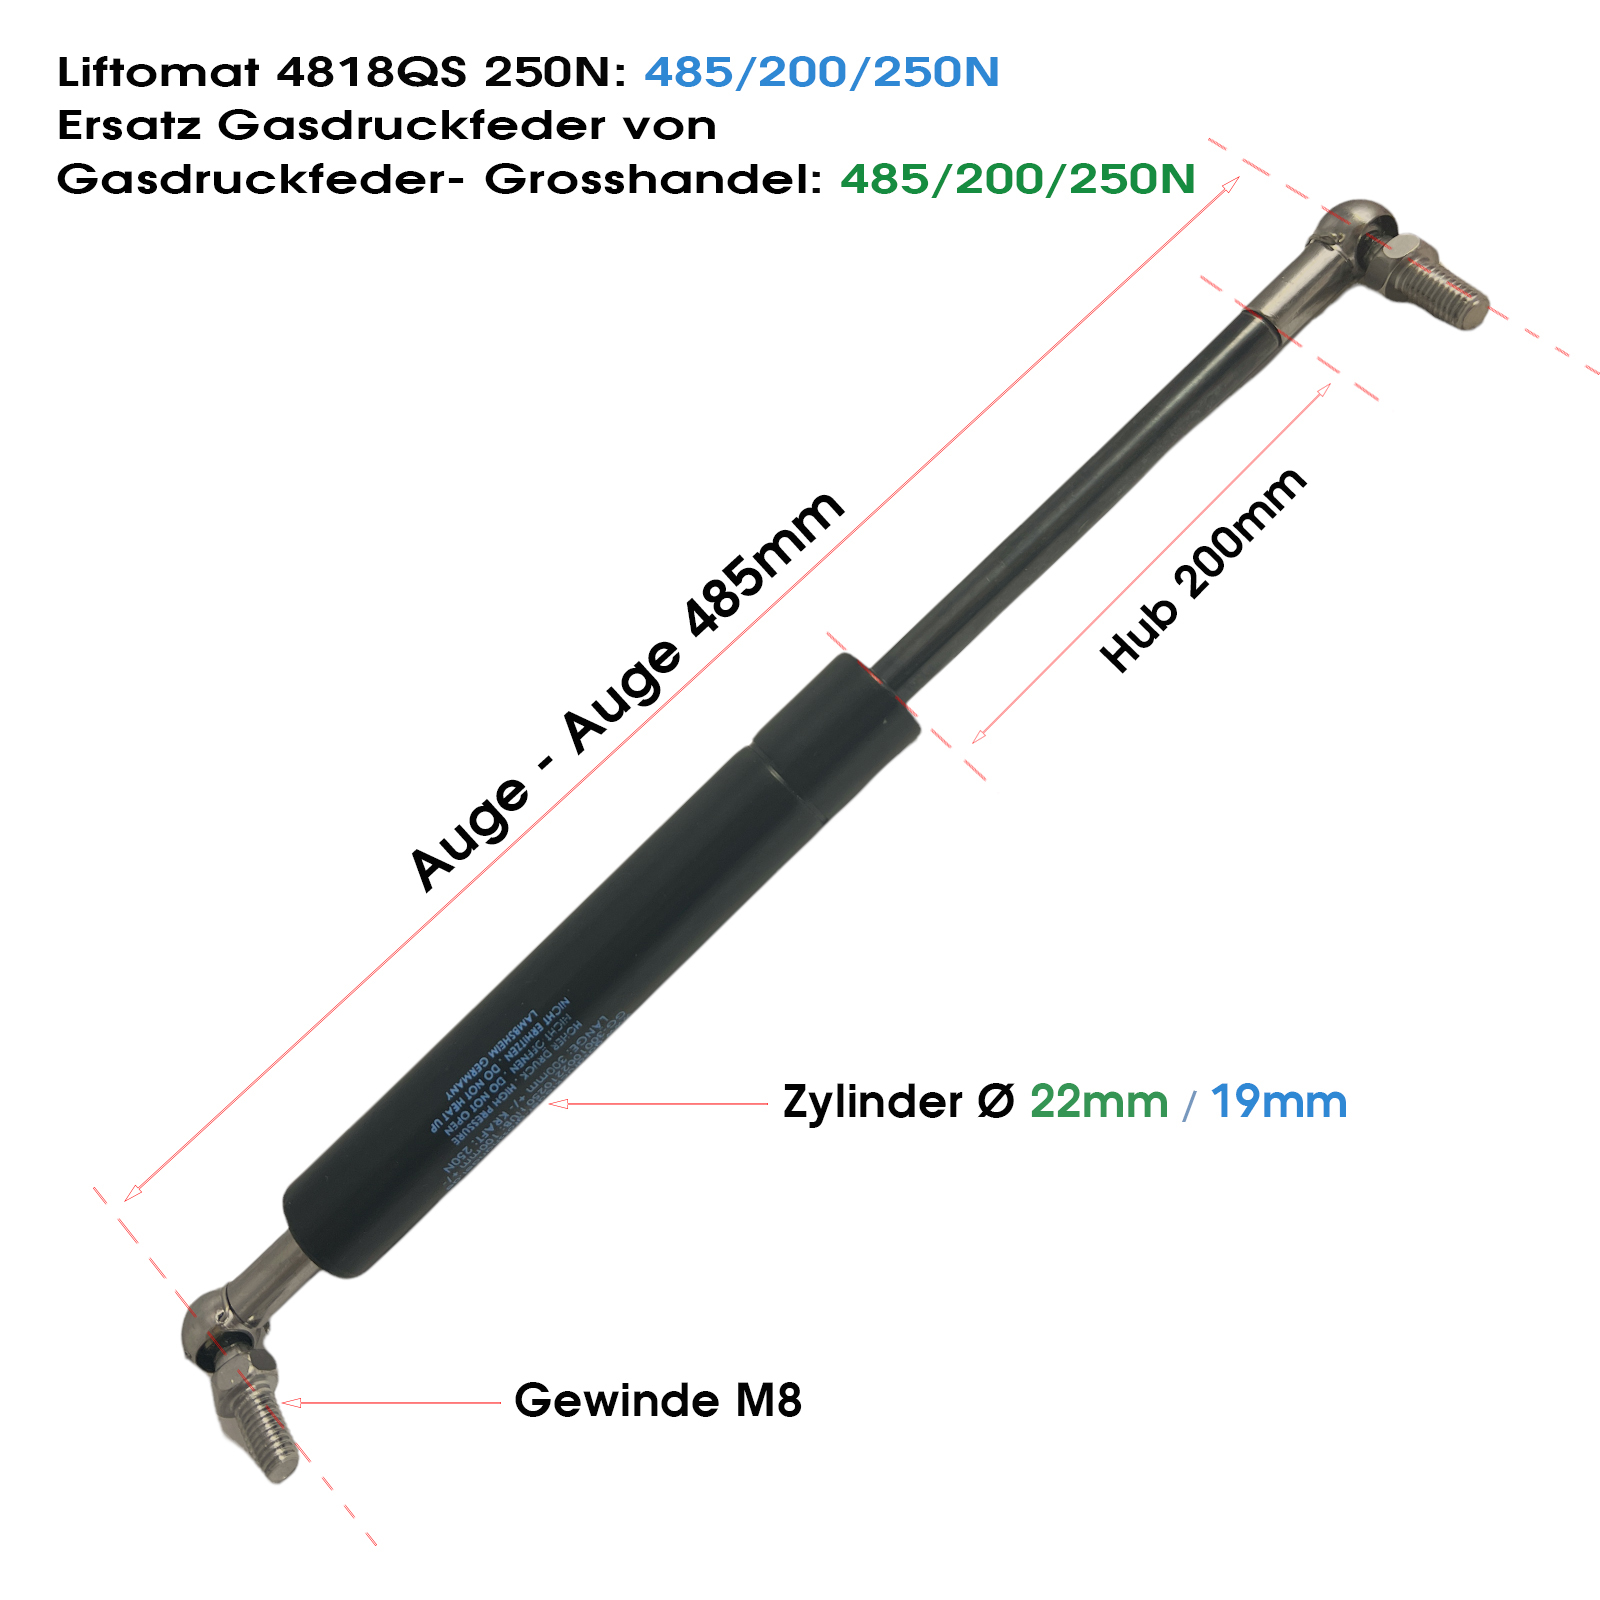 Gasdruckfeder Gasdruckdämpfer Ersatz für Liftomat 4818QS 250N